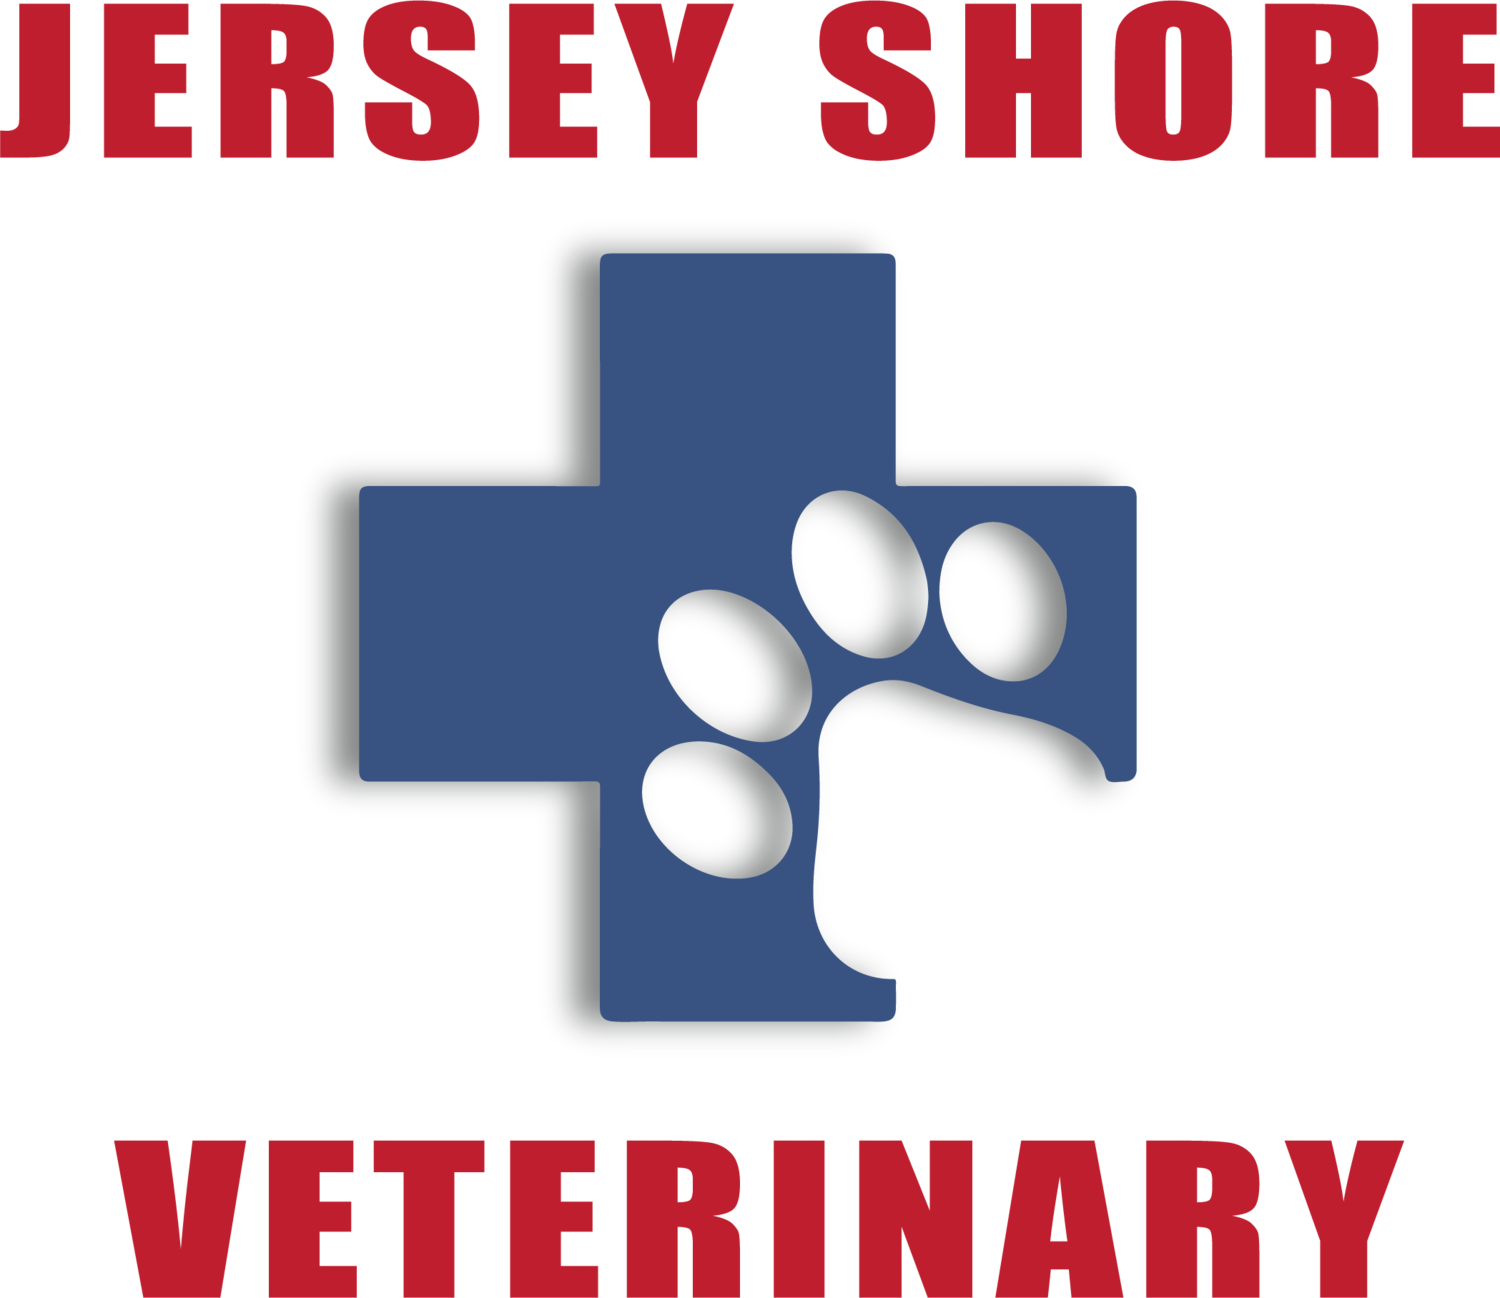 Jersey Shore Veterinary